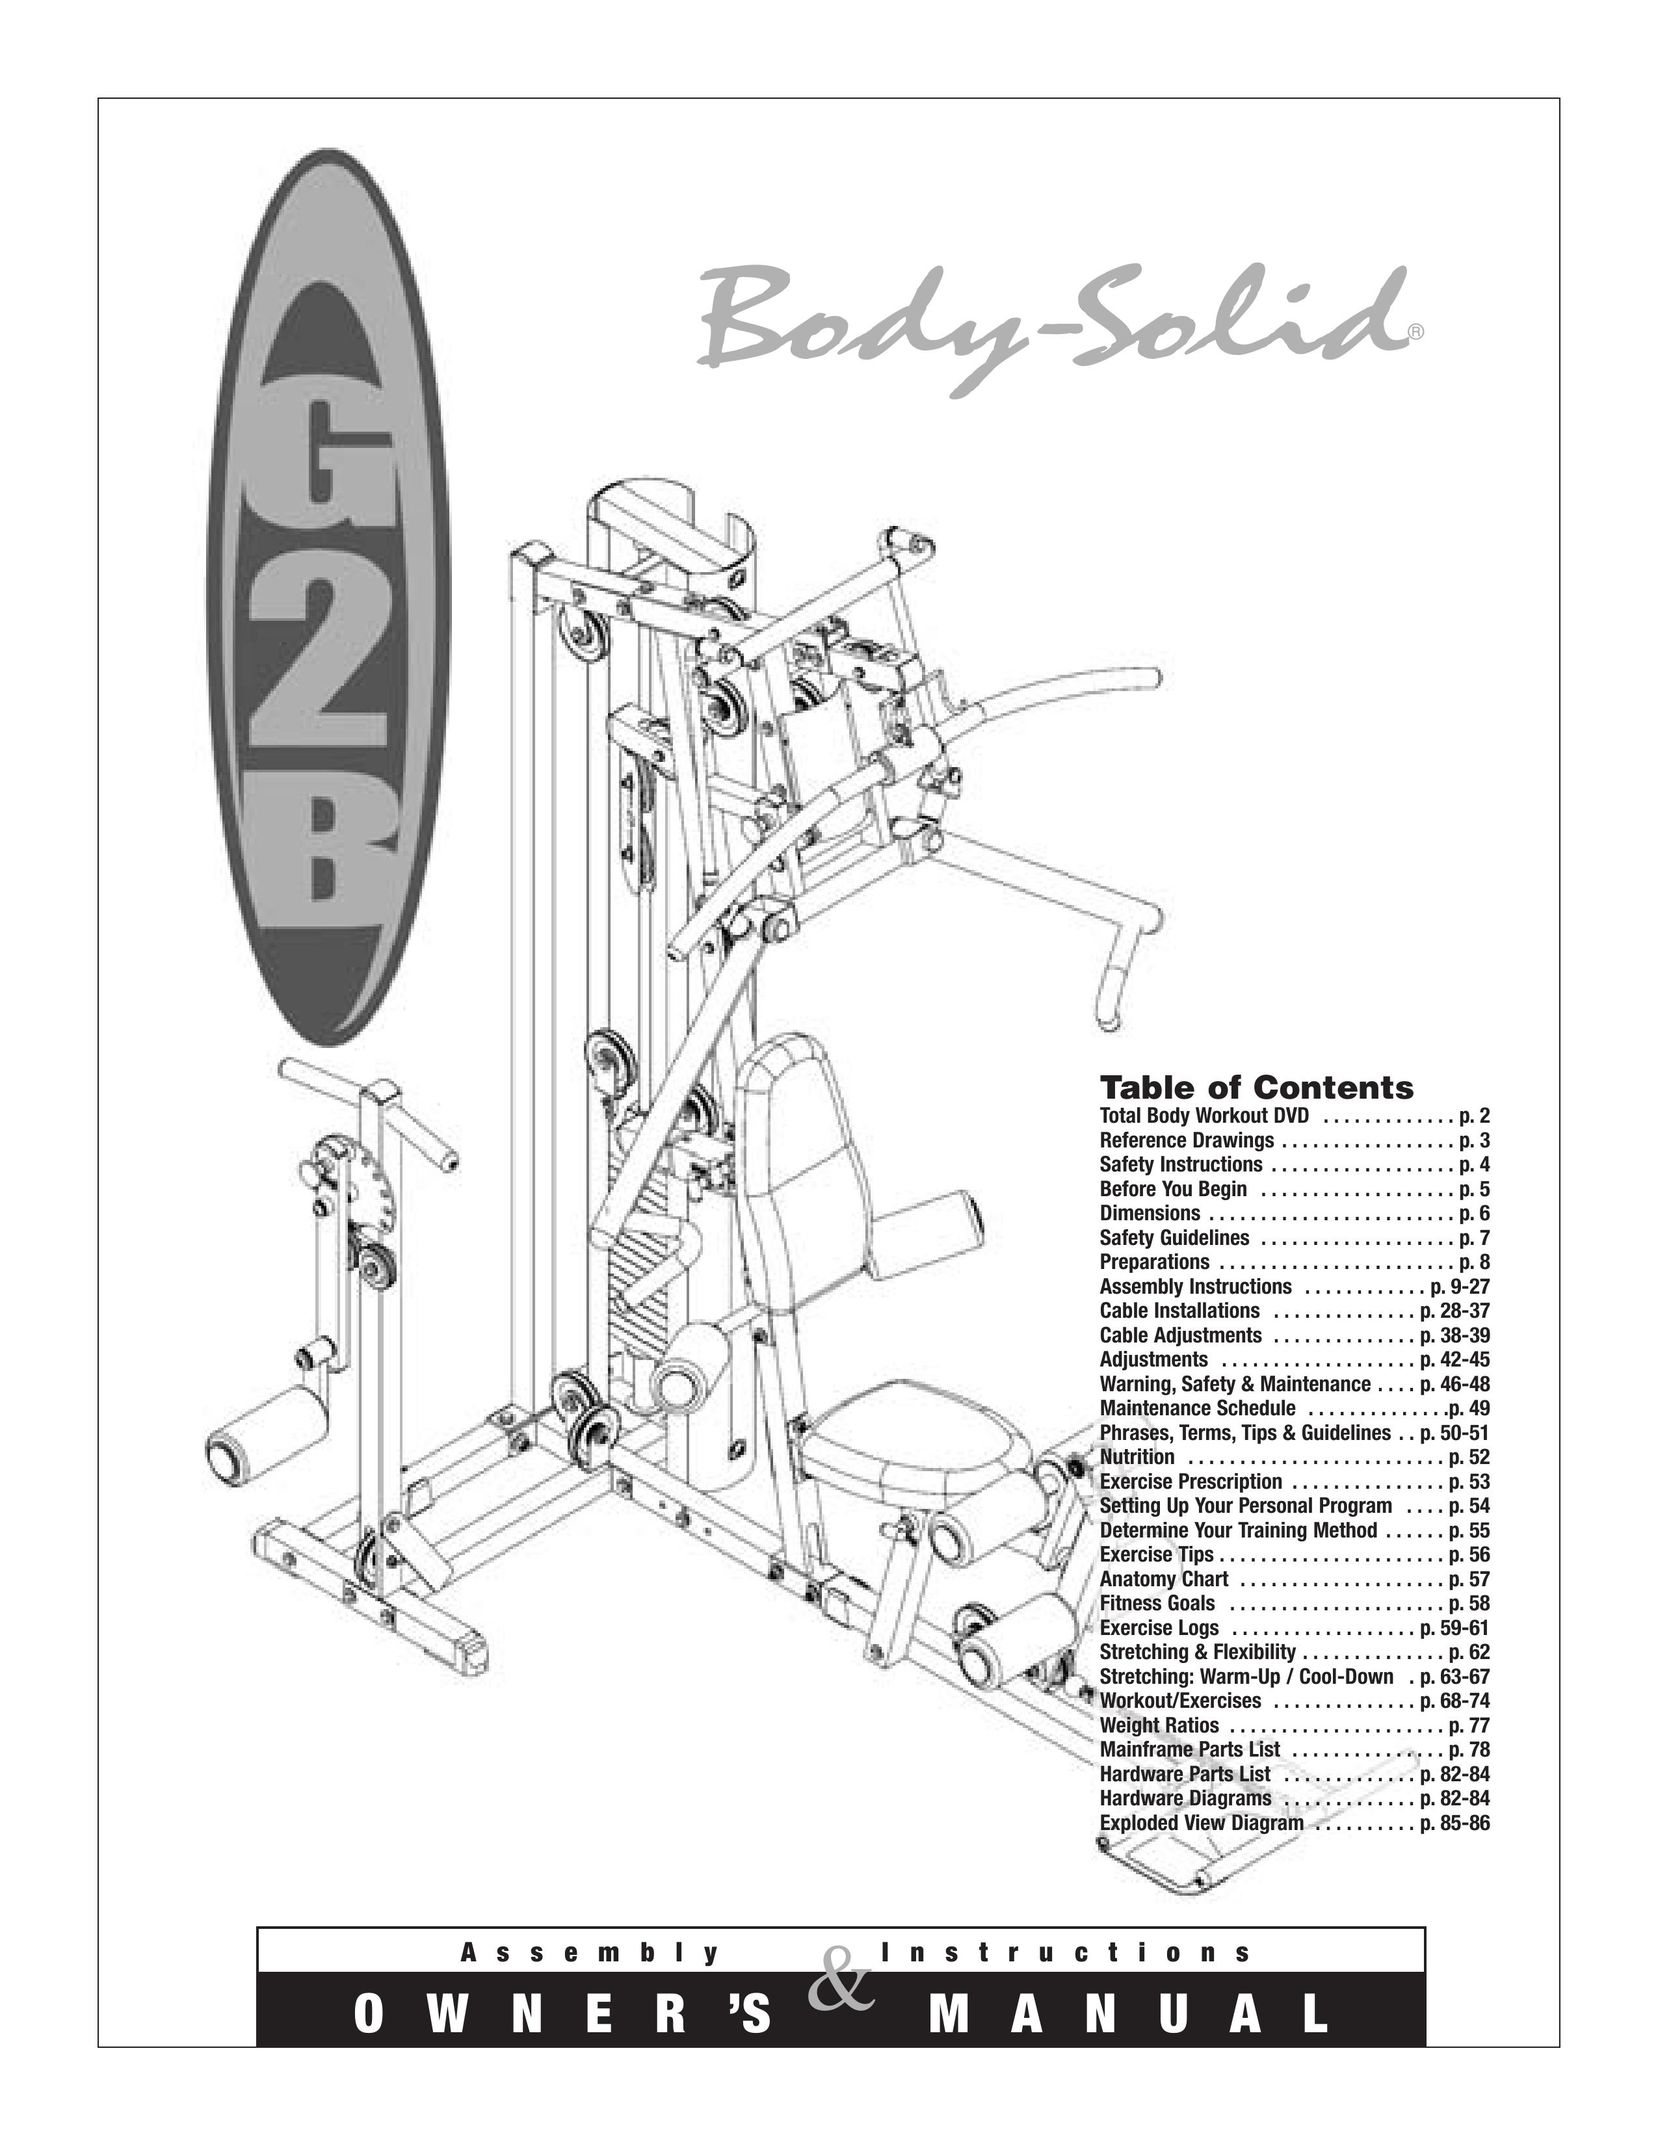 Body Solid G2B Fitness Equipment User Manual